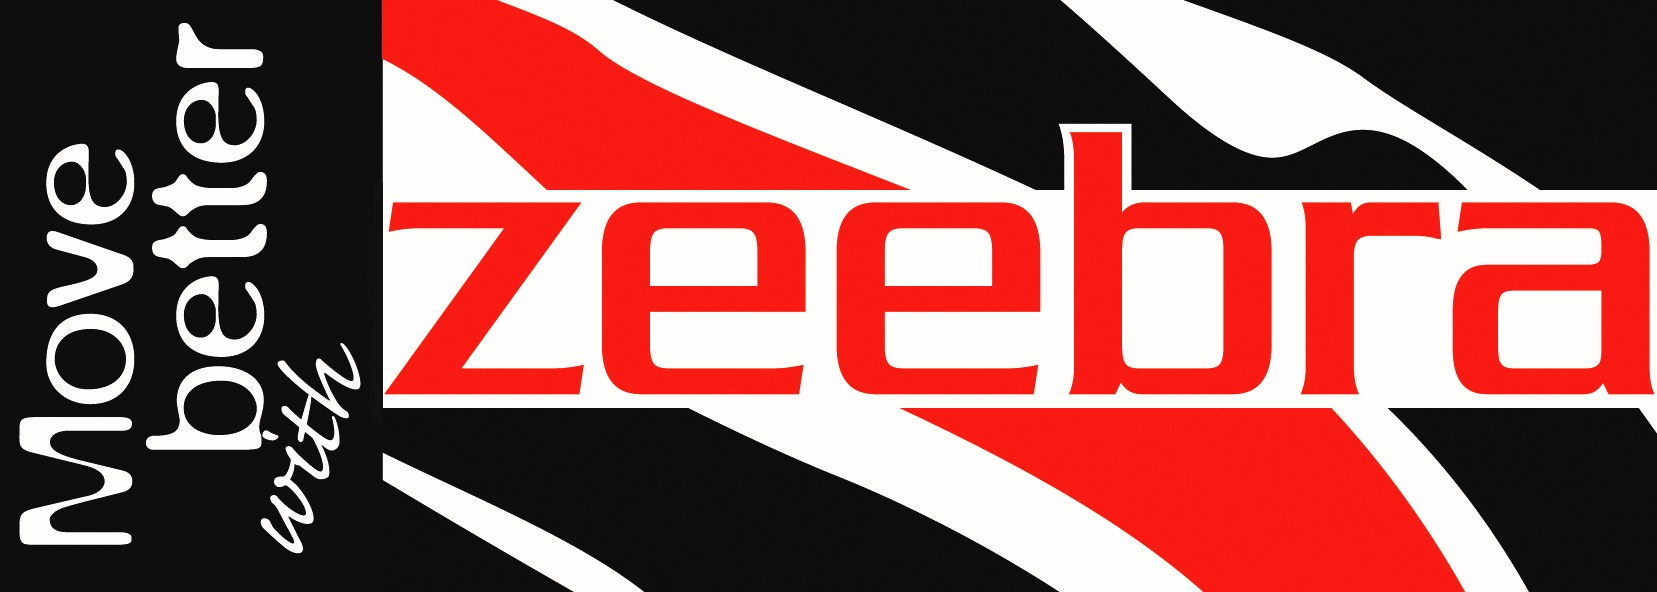 Zeebra logo 2